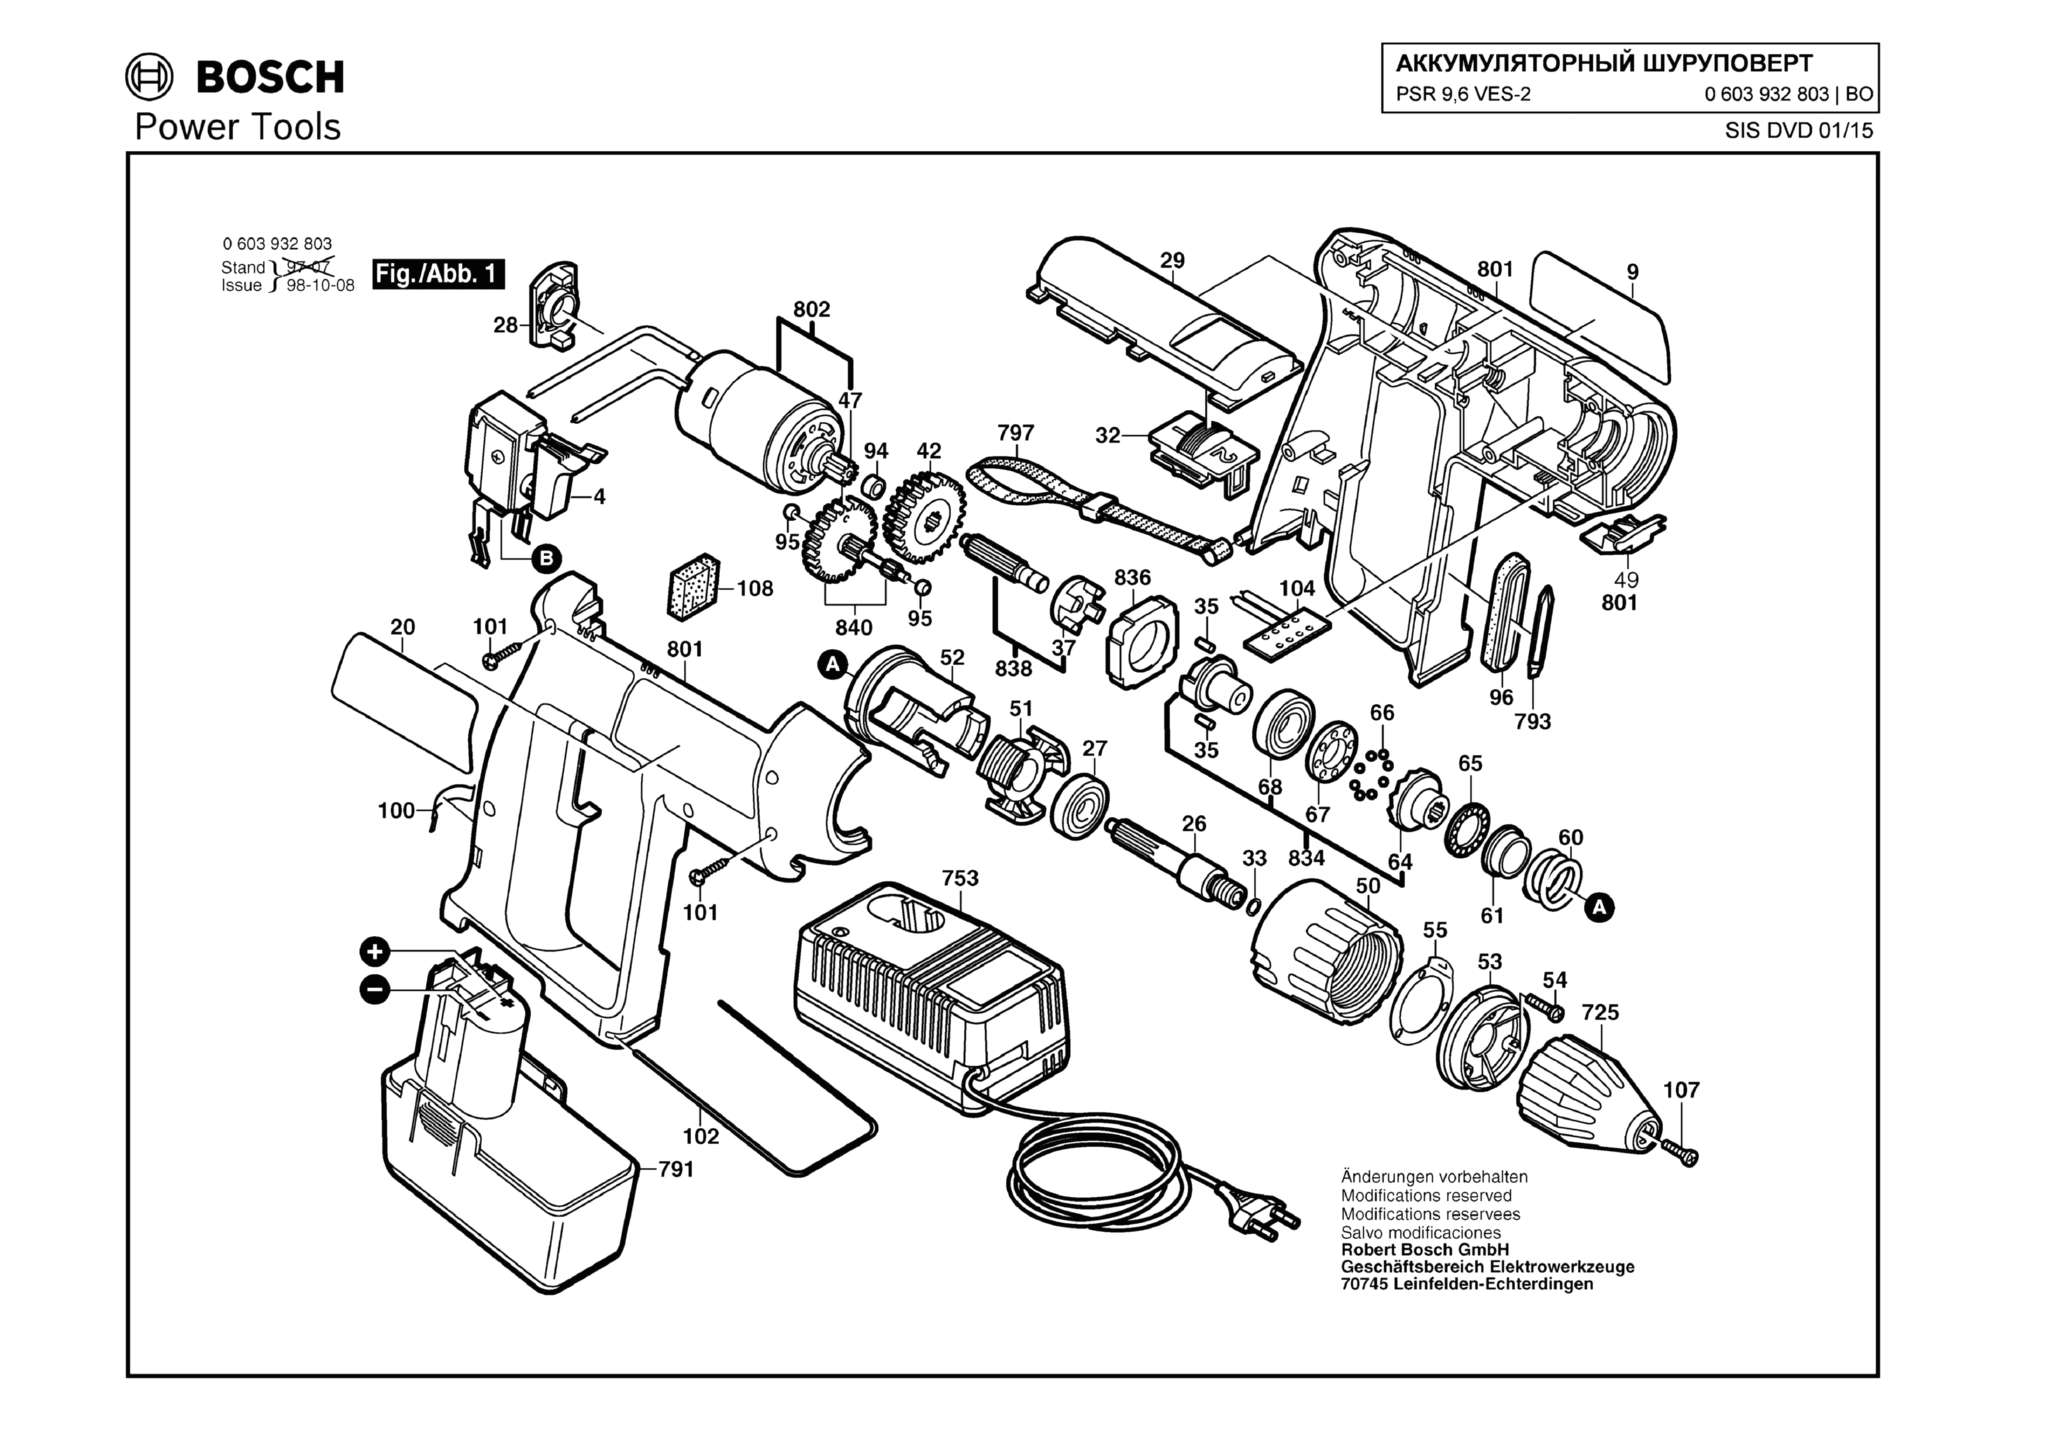 Запчасти, схема и деталировка Bosch PSR 9,6 VES-2 (ТИП 0603932803)